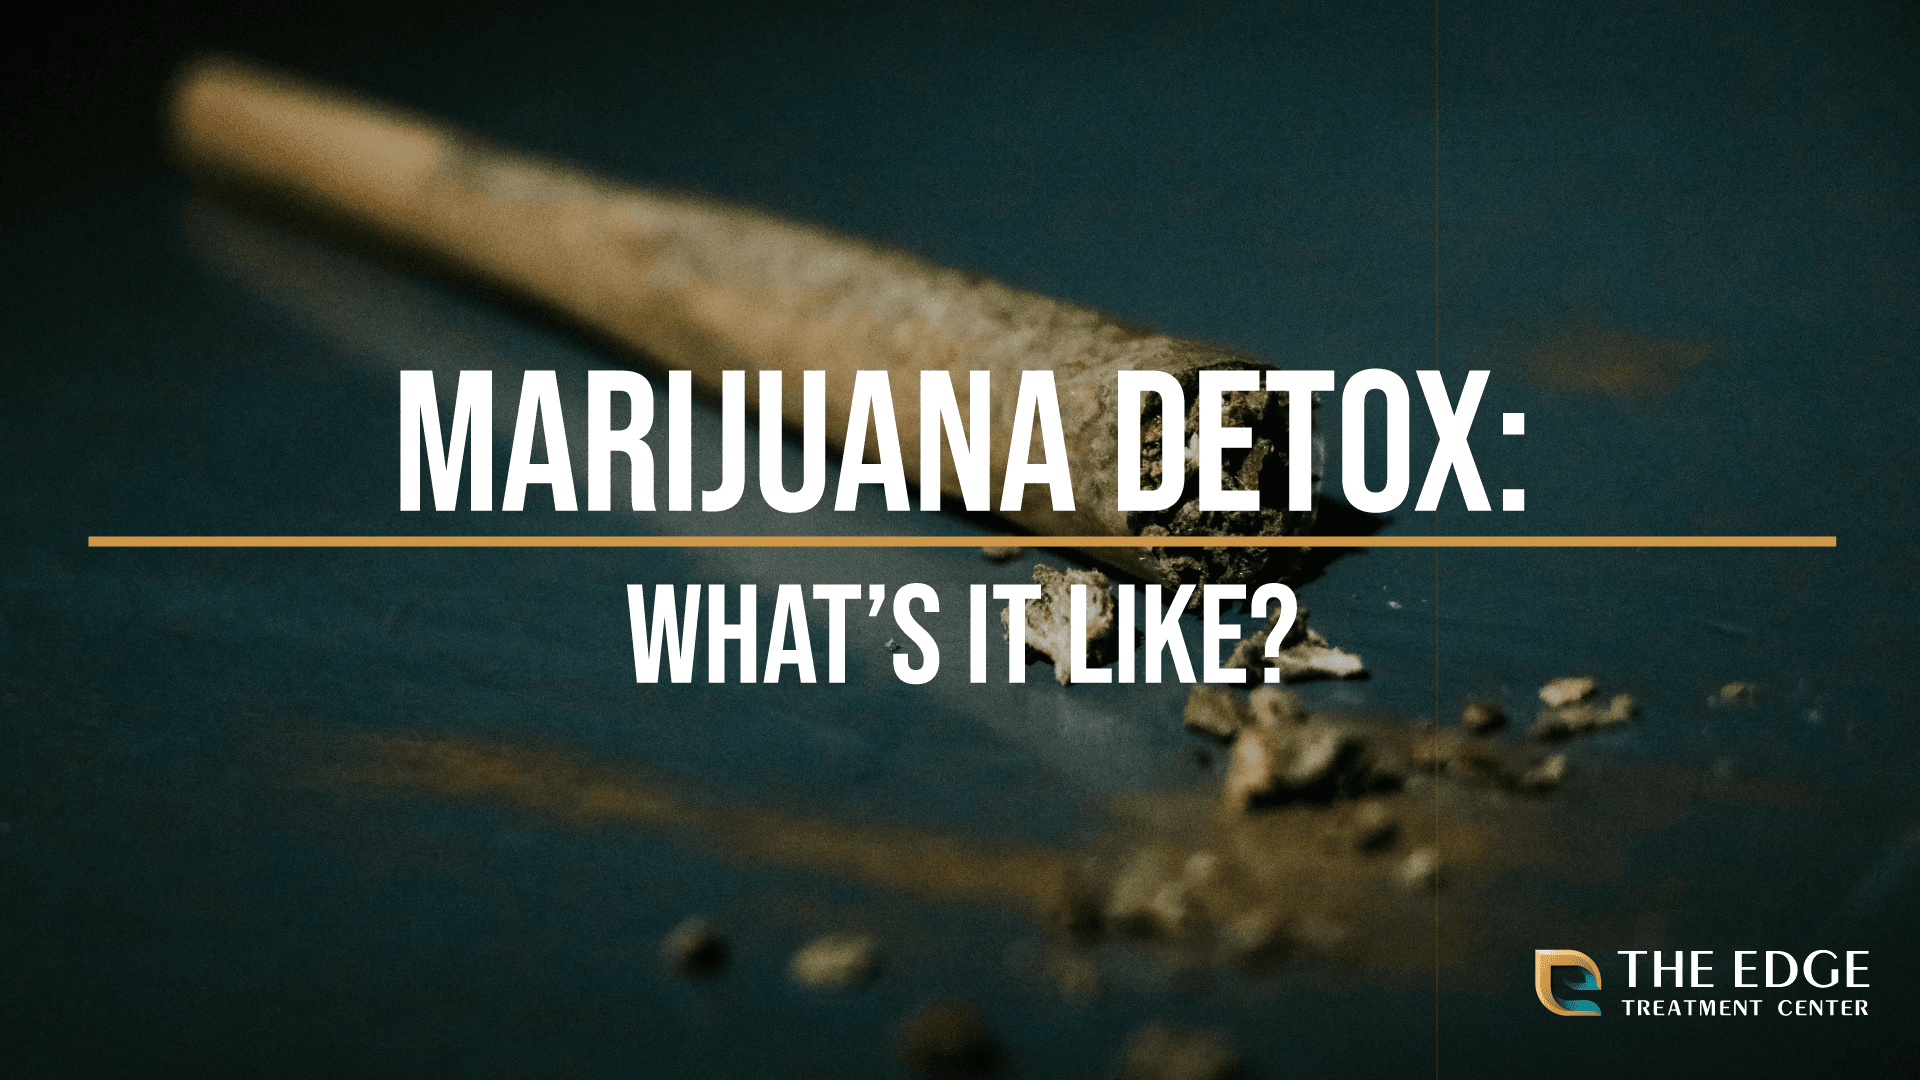 What is Marijuana Detox Like?